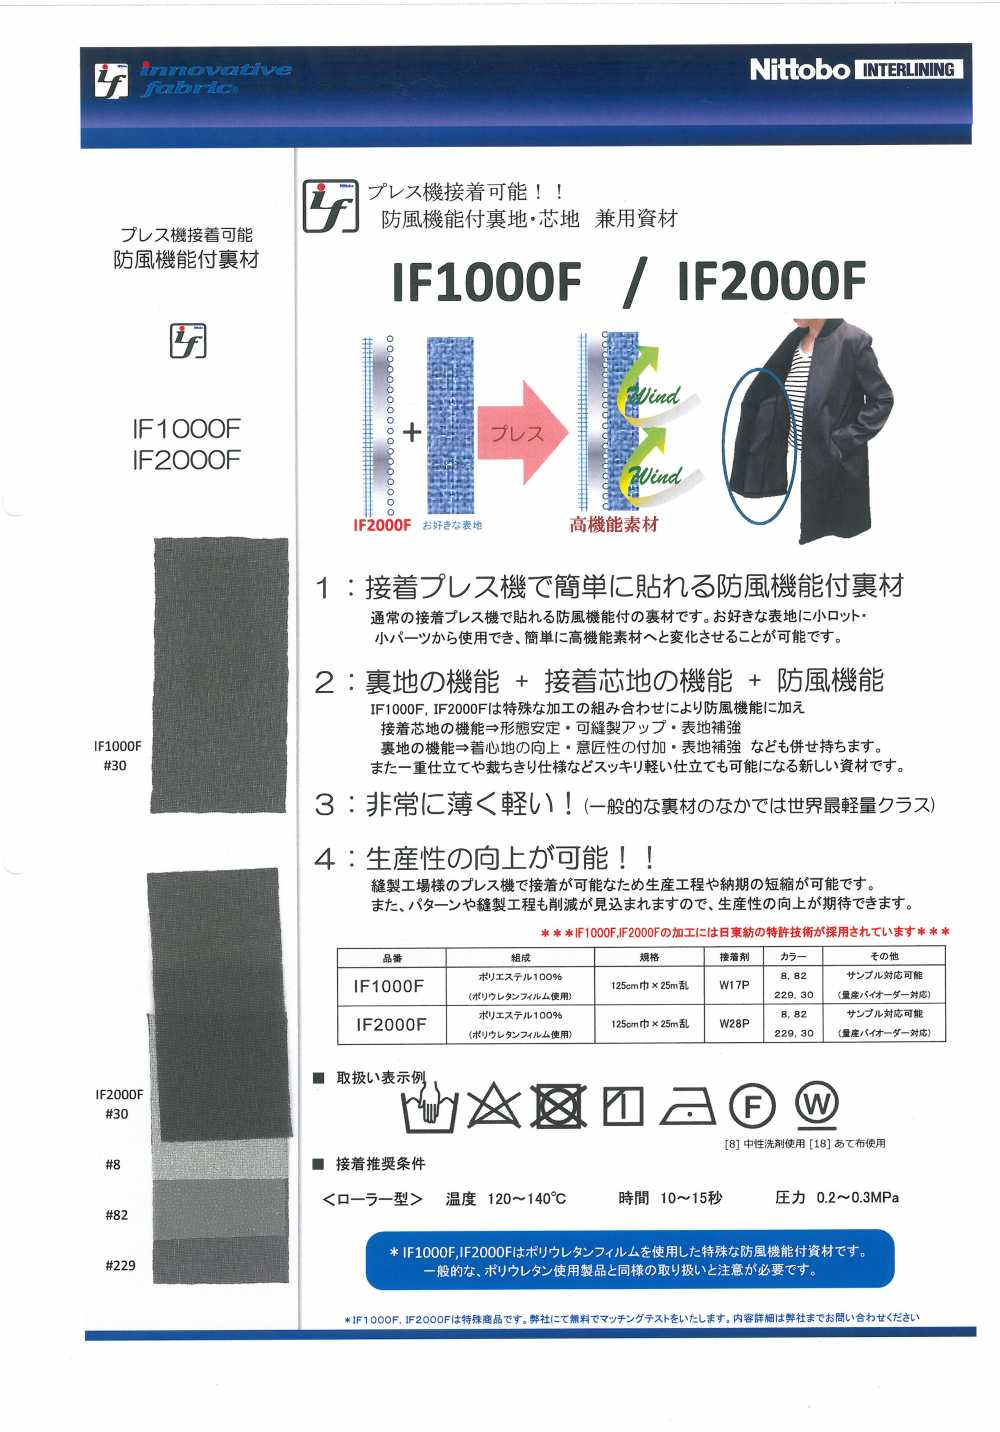 IF1000F/2000FSAMPLE Sample Card